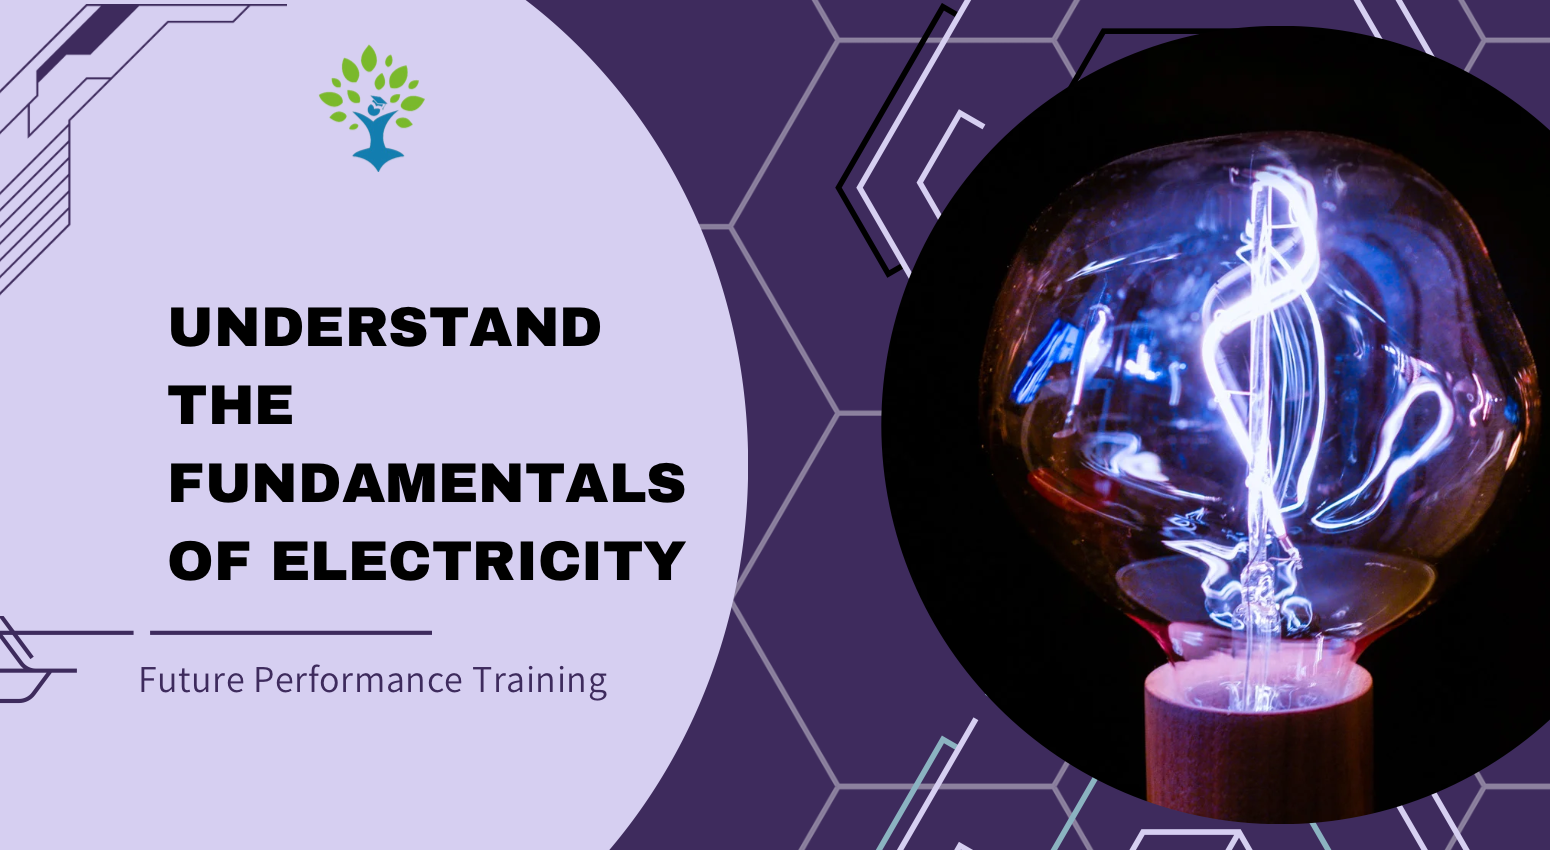 Understand fundamentals of electricity